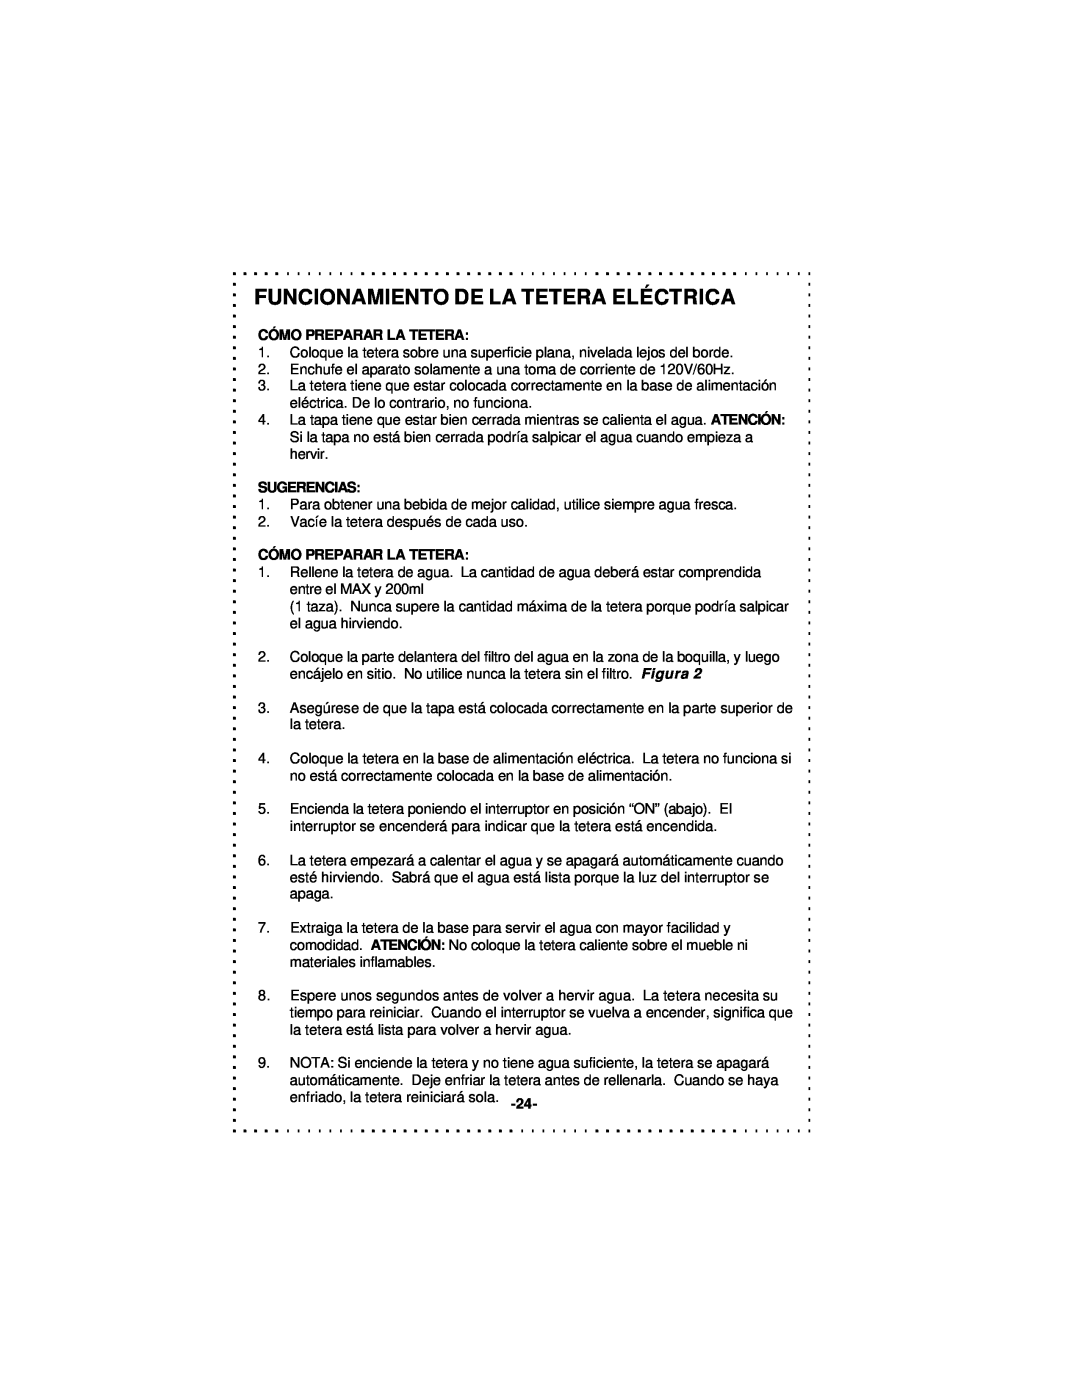 DeLonghi DSJ900 instruction manual Funcionamiento De La Tetera Eléctrica 